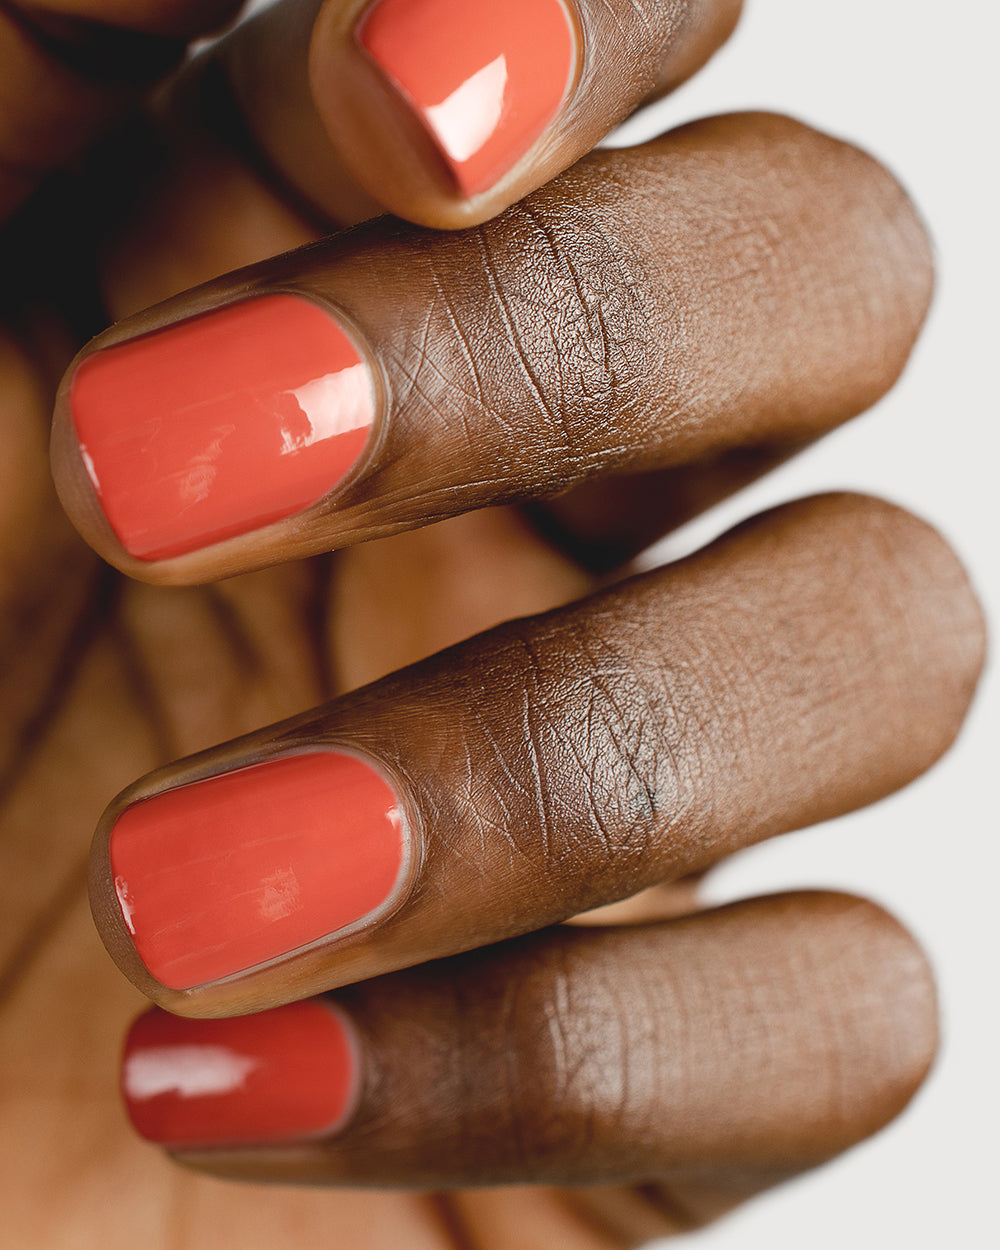 Brick red nail polish hand swatch on dark skin tone up-close